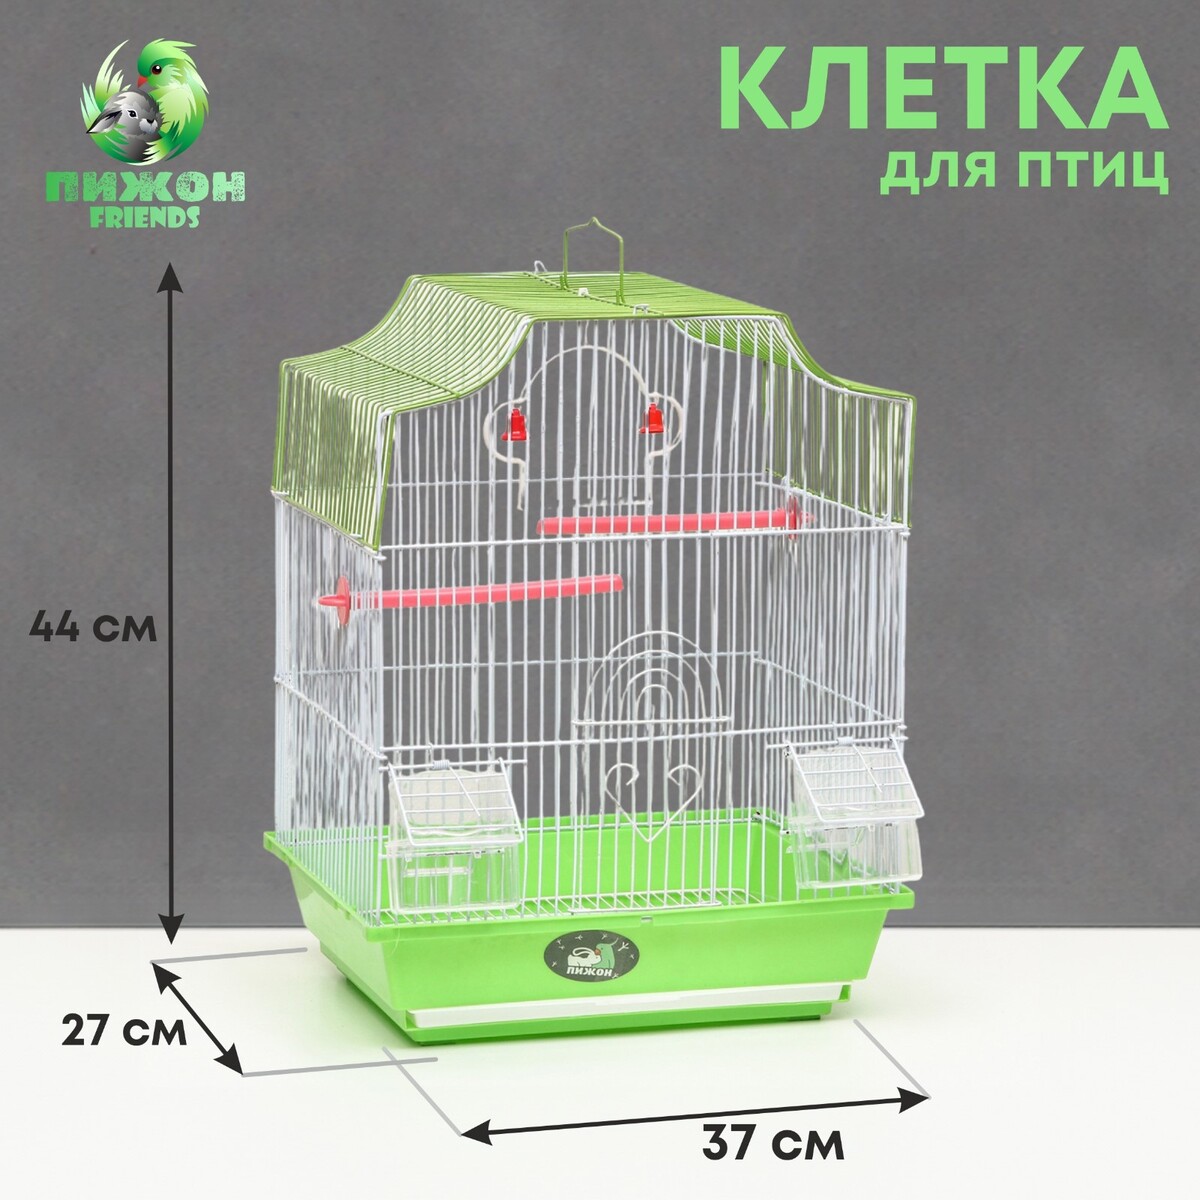 Клетка для птиц укомплектованная bd-2/4f, 34 х 27 х 44 см, зеленая Пижон